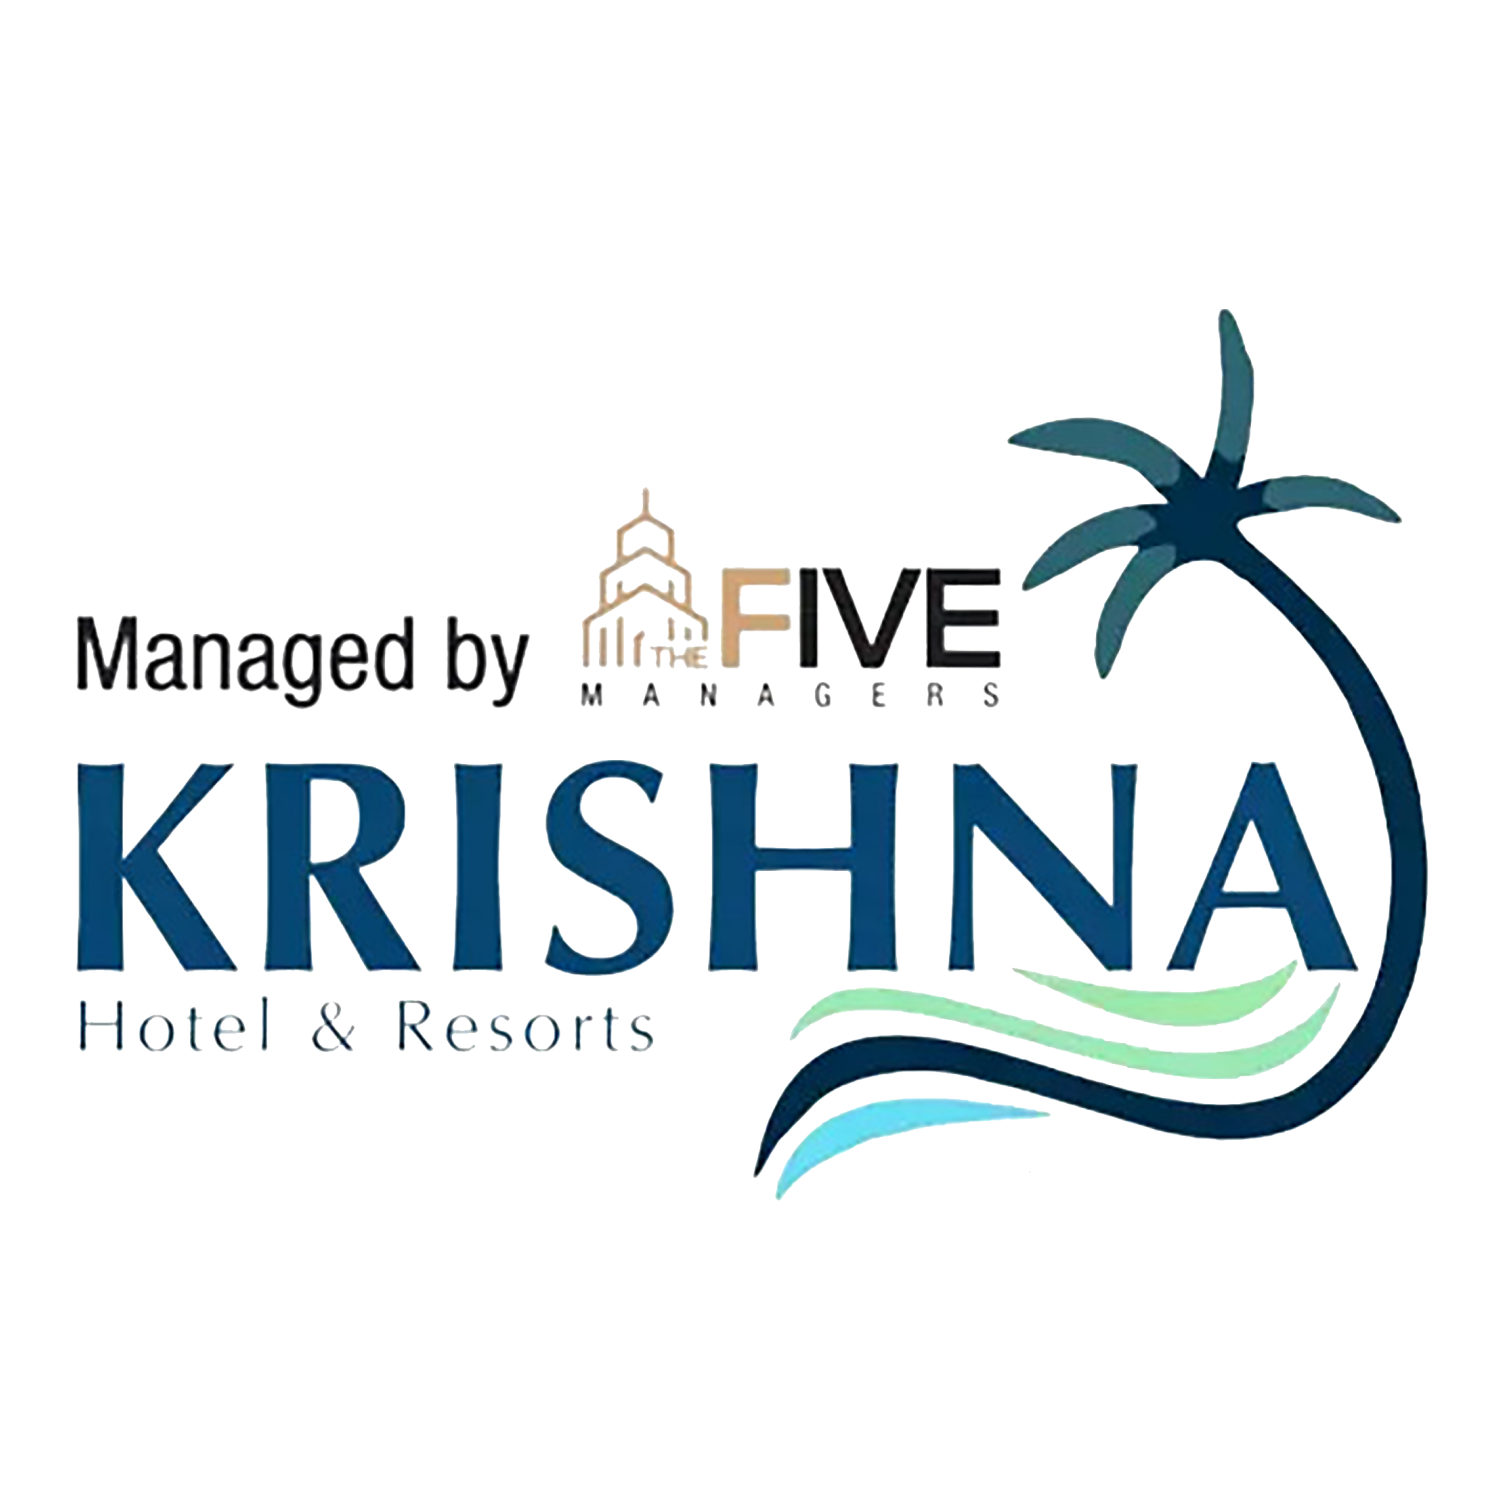 Krishna Hotel and Resort|Hotel|Accomodation